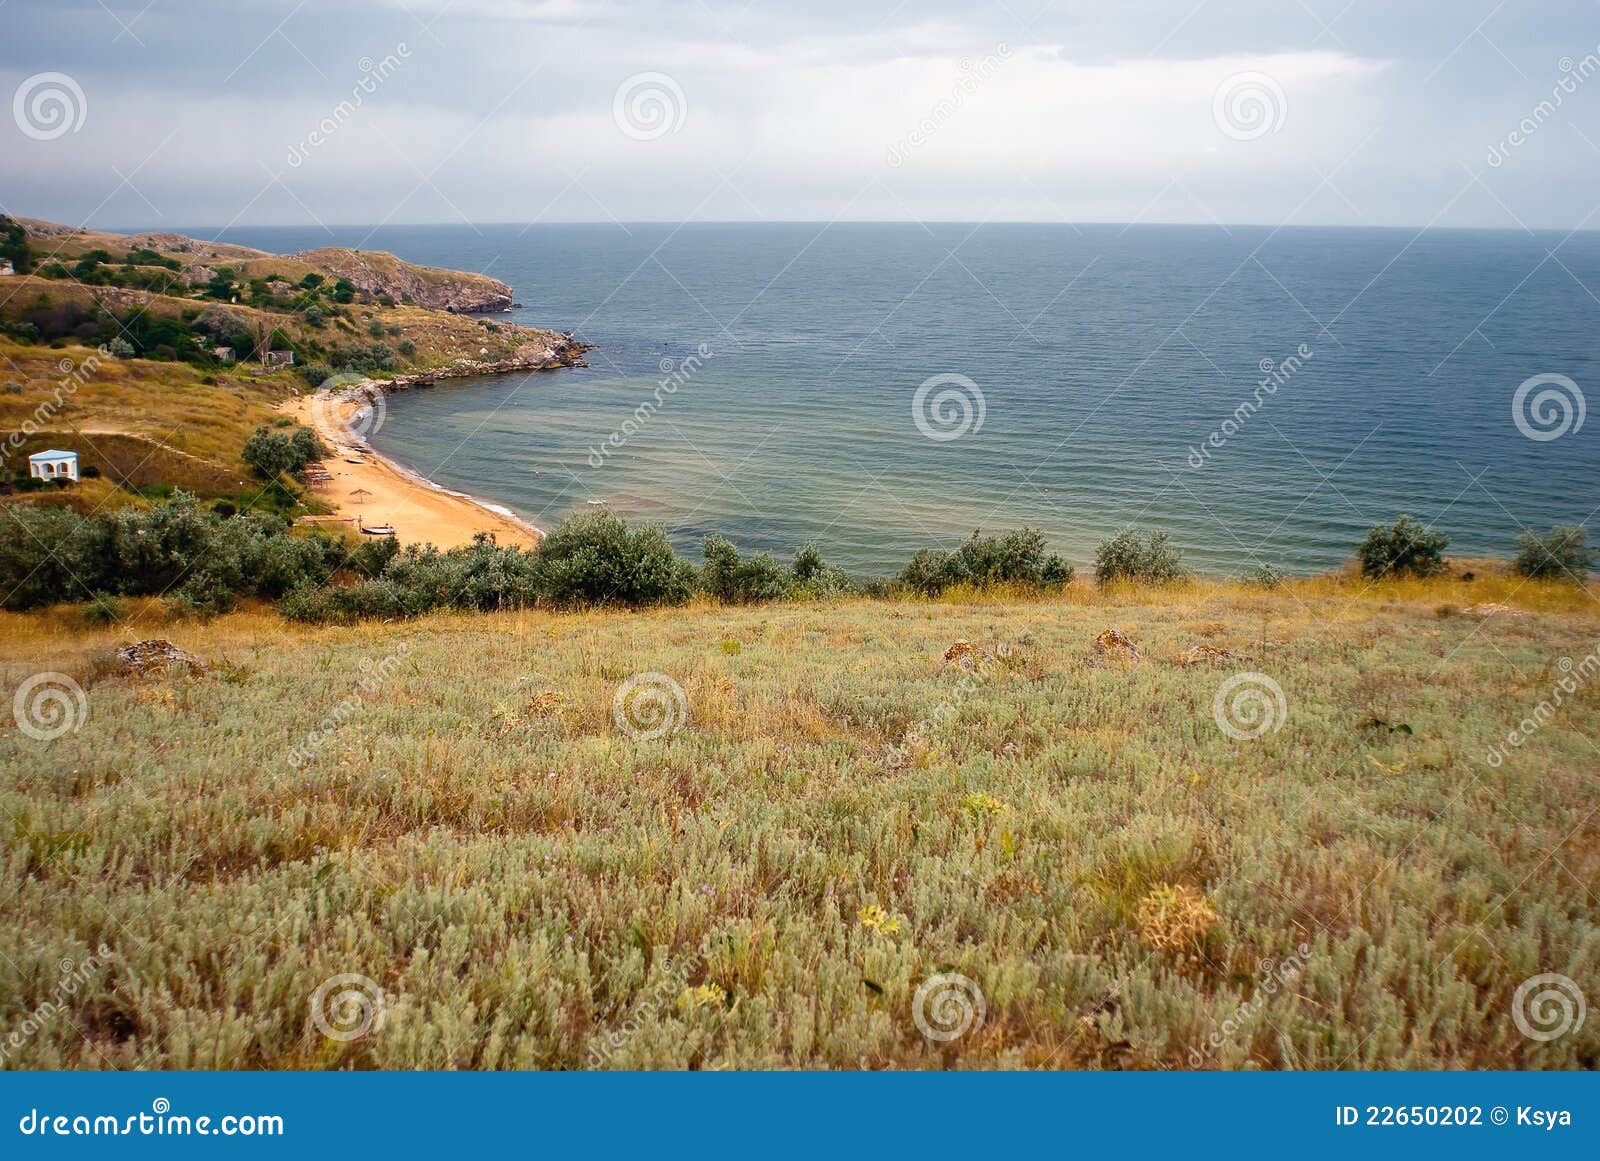 azov landscape